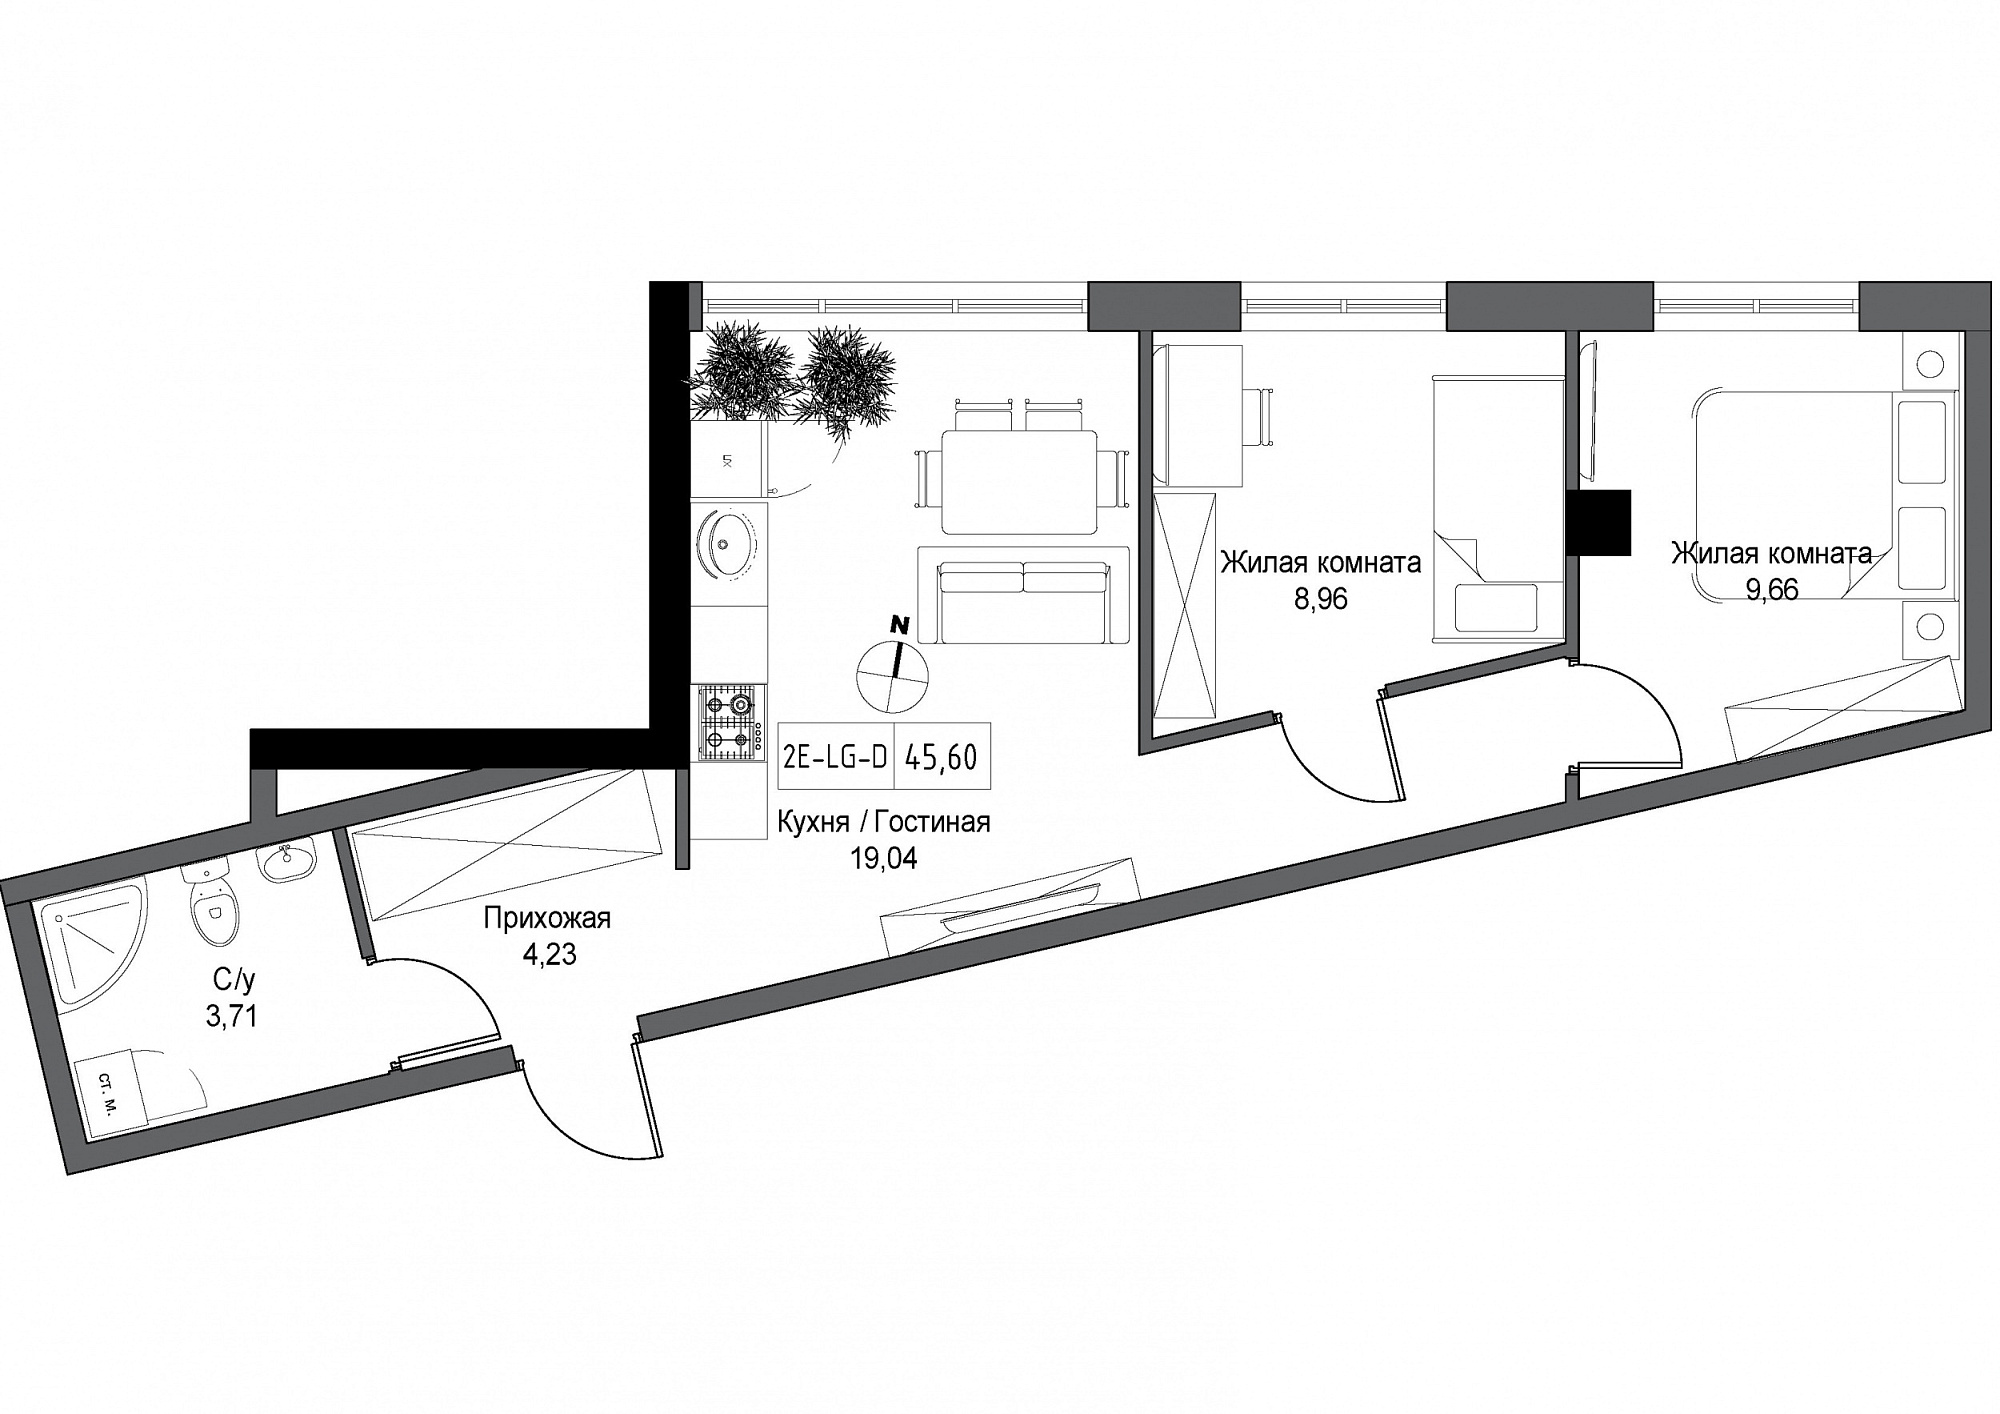 Планування 2-к квартира площею 45.6м2, UM-004-03/0005.